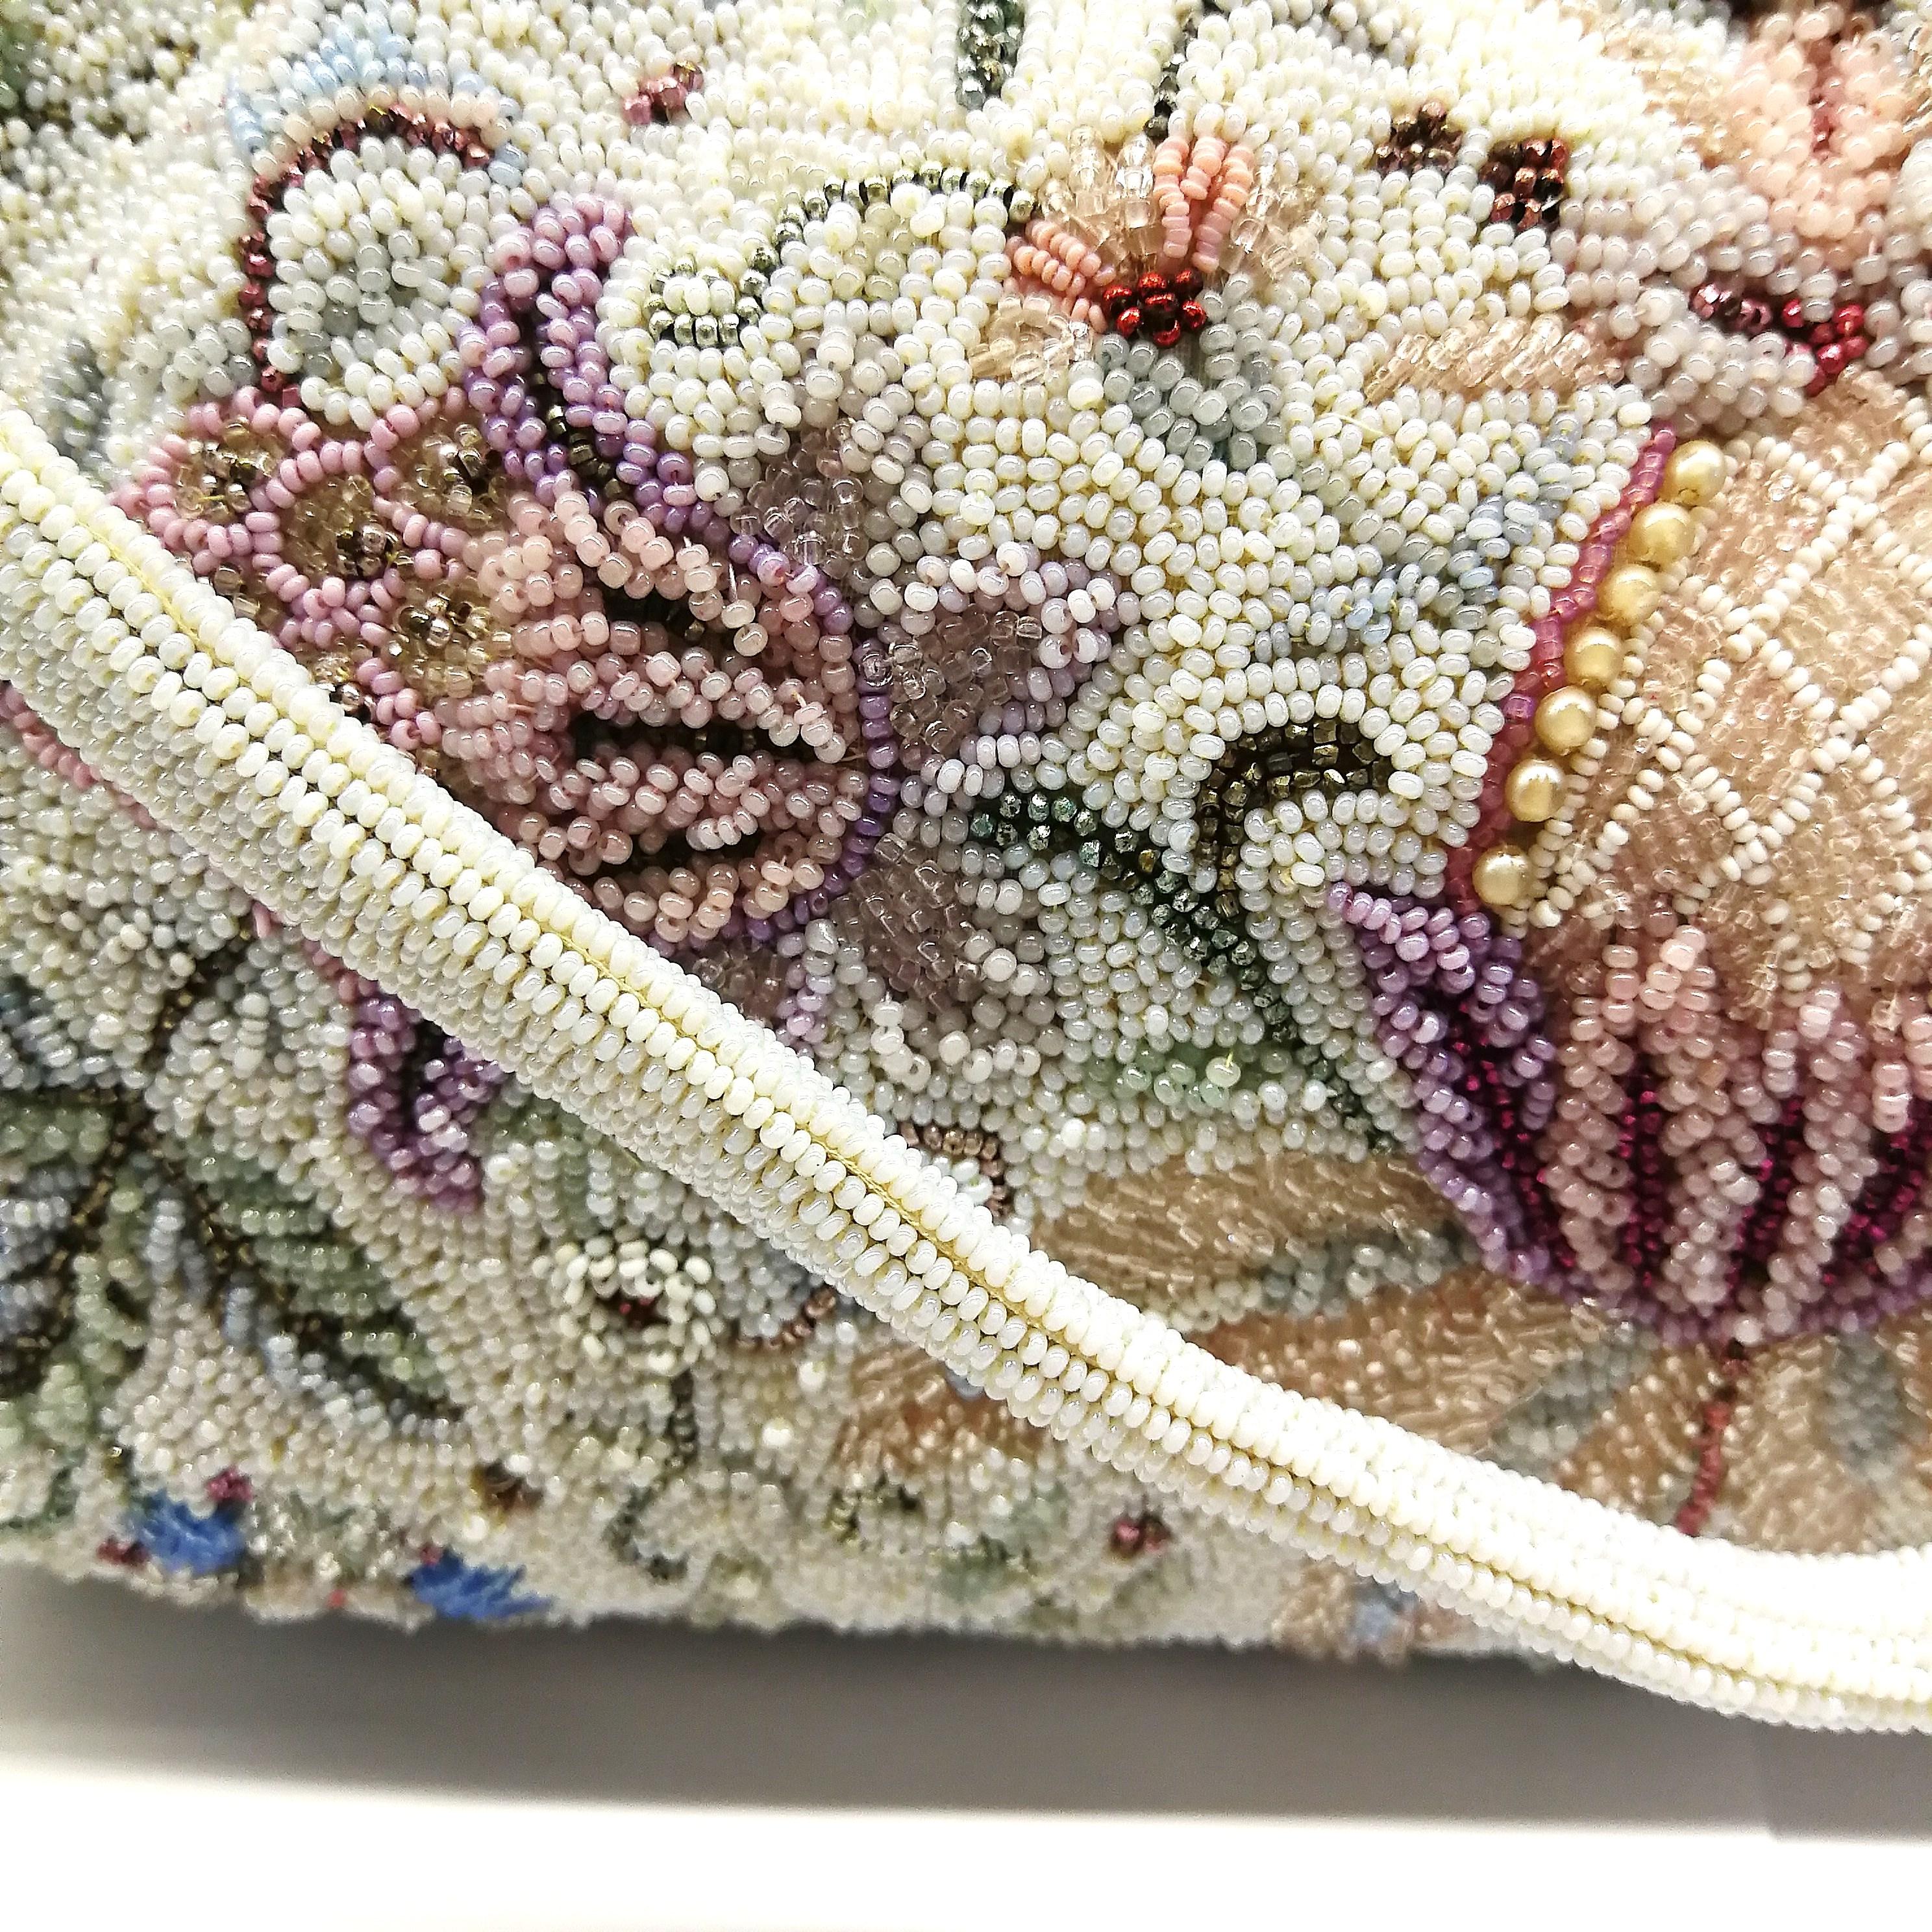 Women's Very intricate micro-bead handbag with 'floral' design', Capion, Paris, 1950s